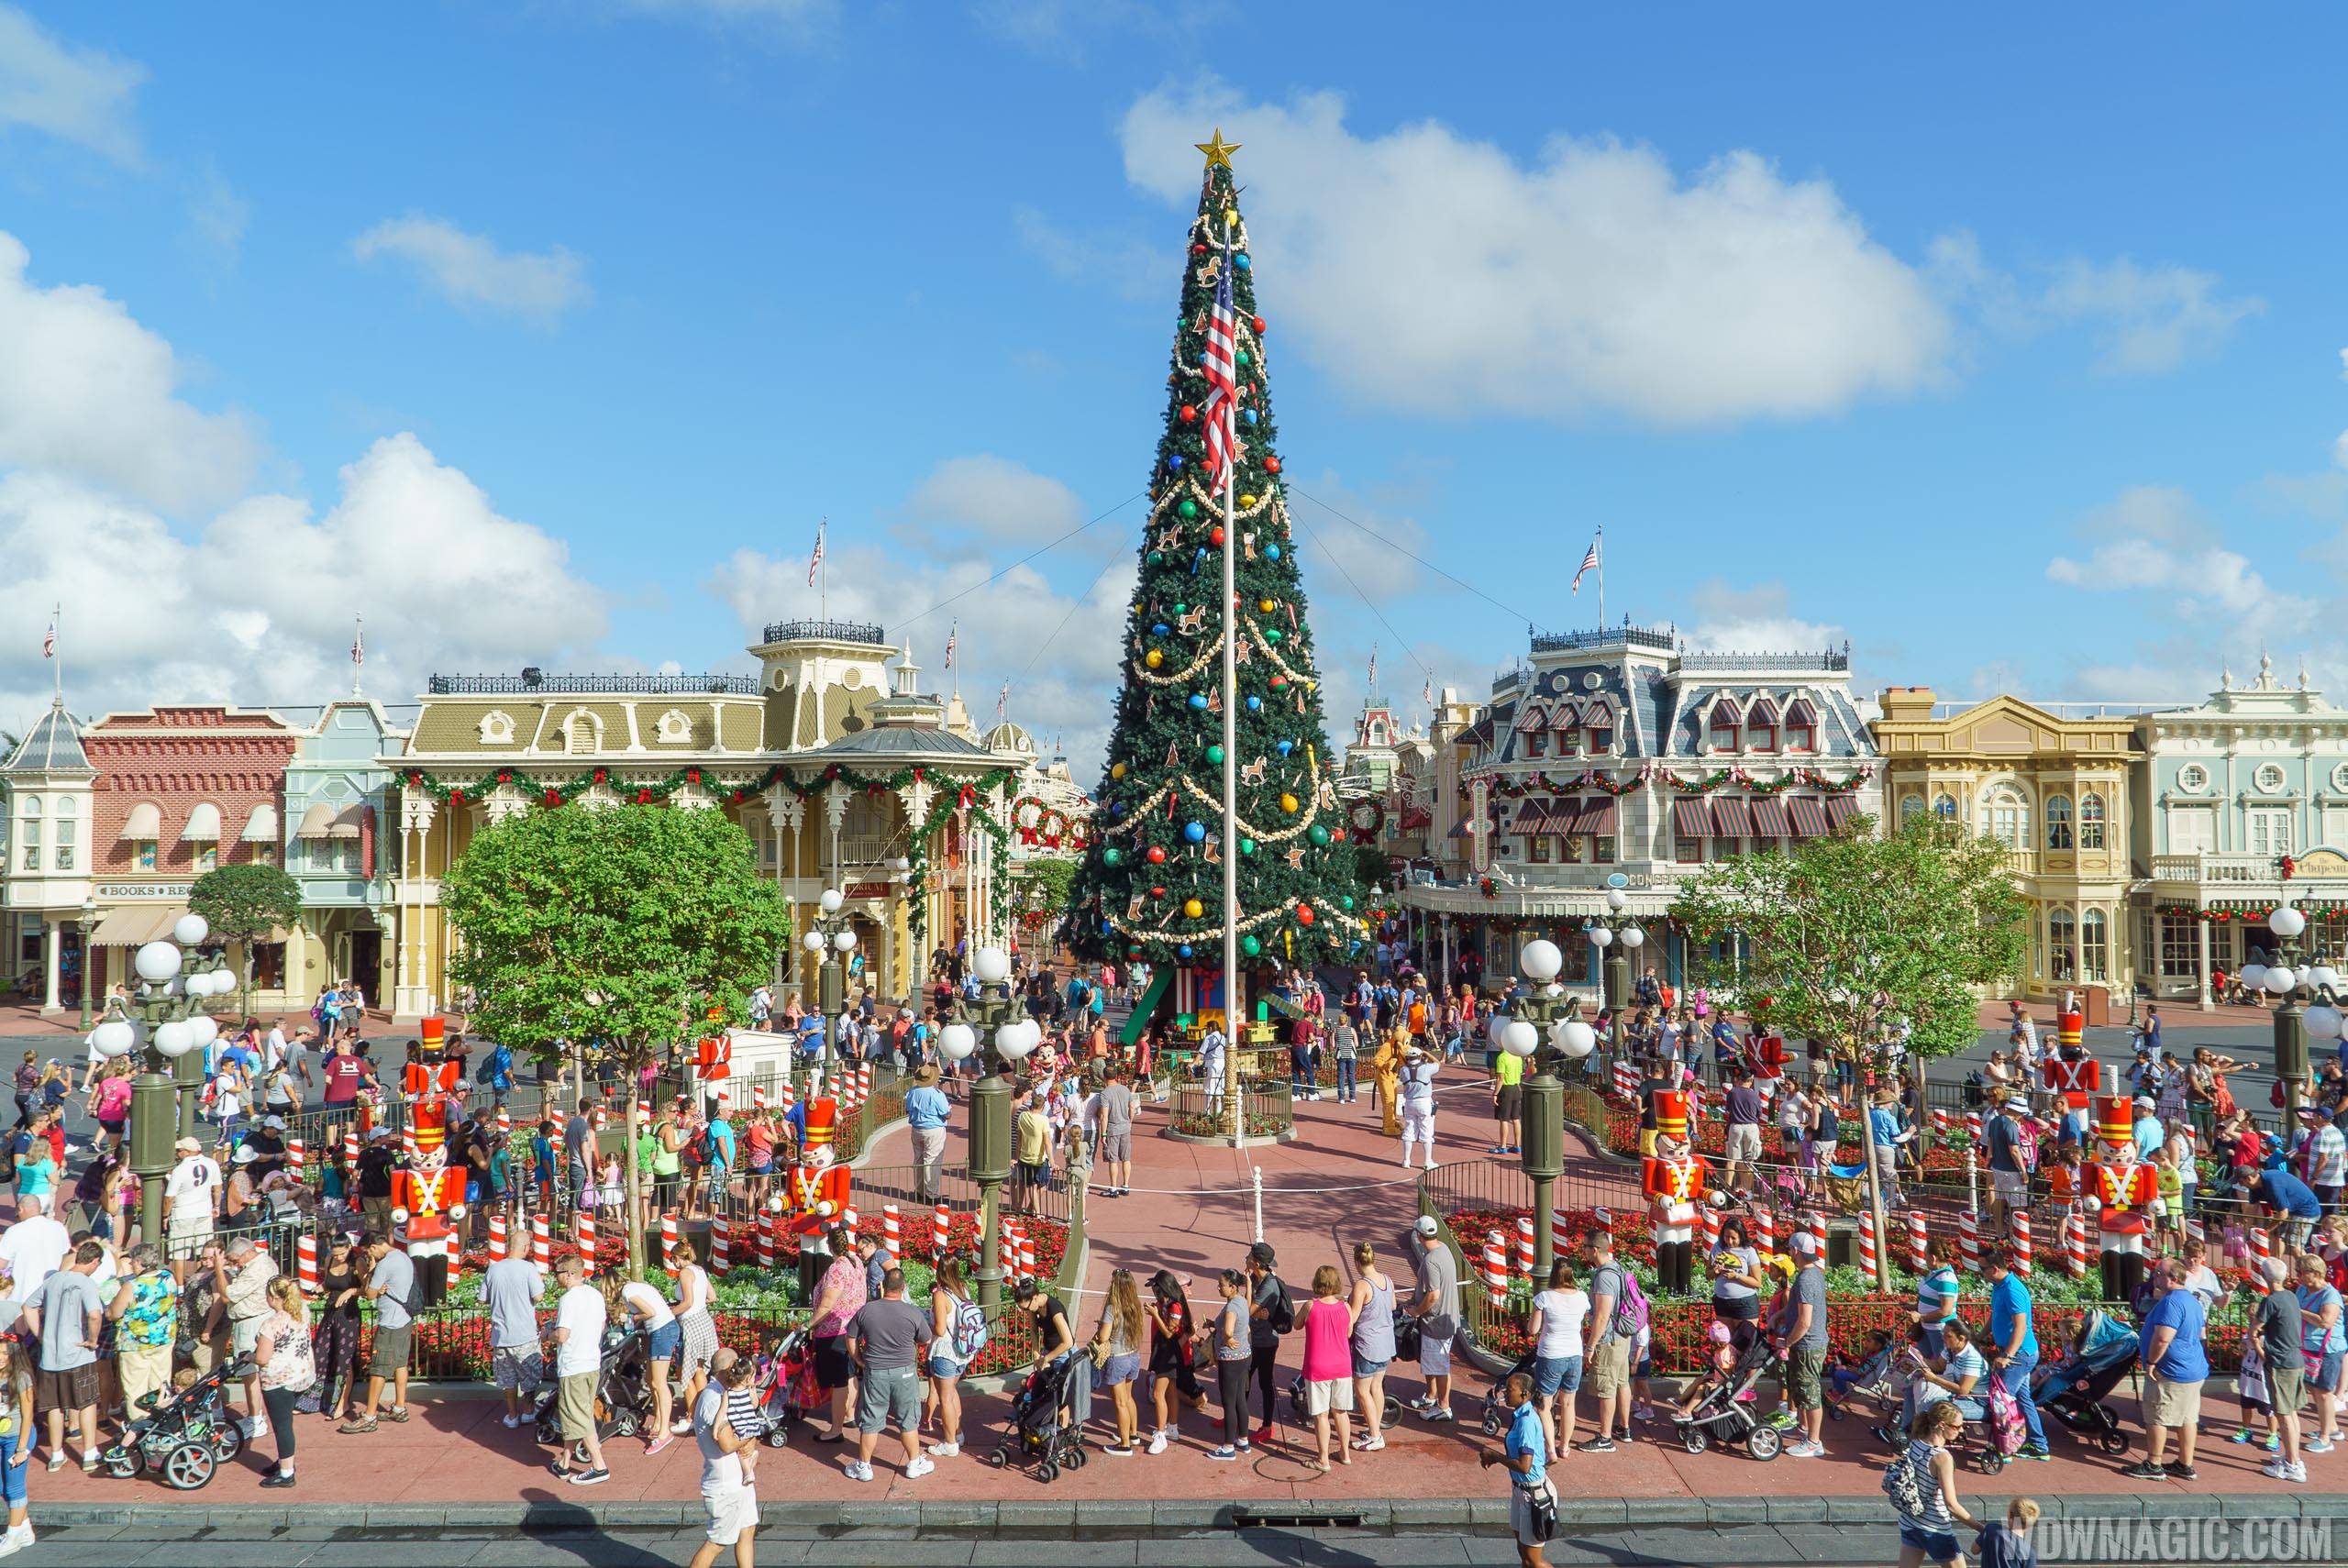 Holidays decorations at the Magic Kingdom 2015